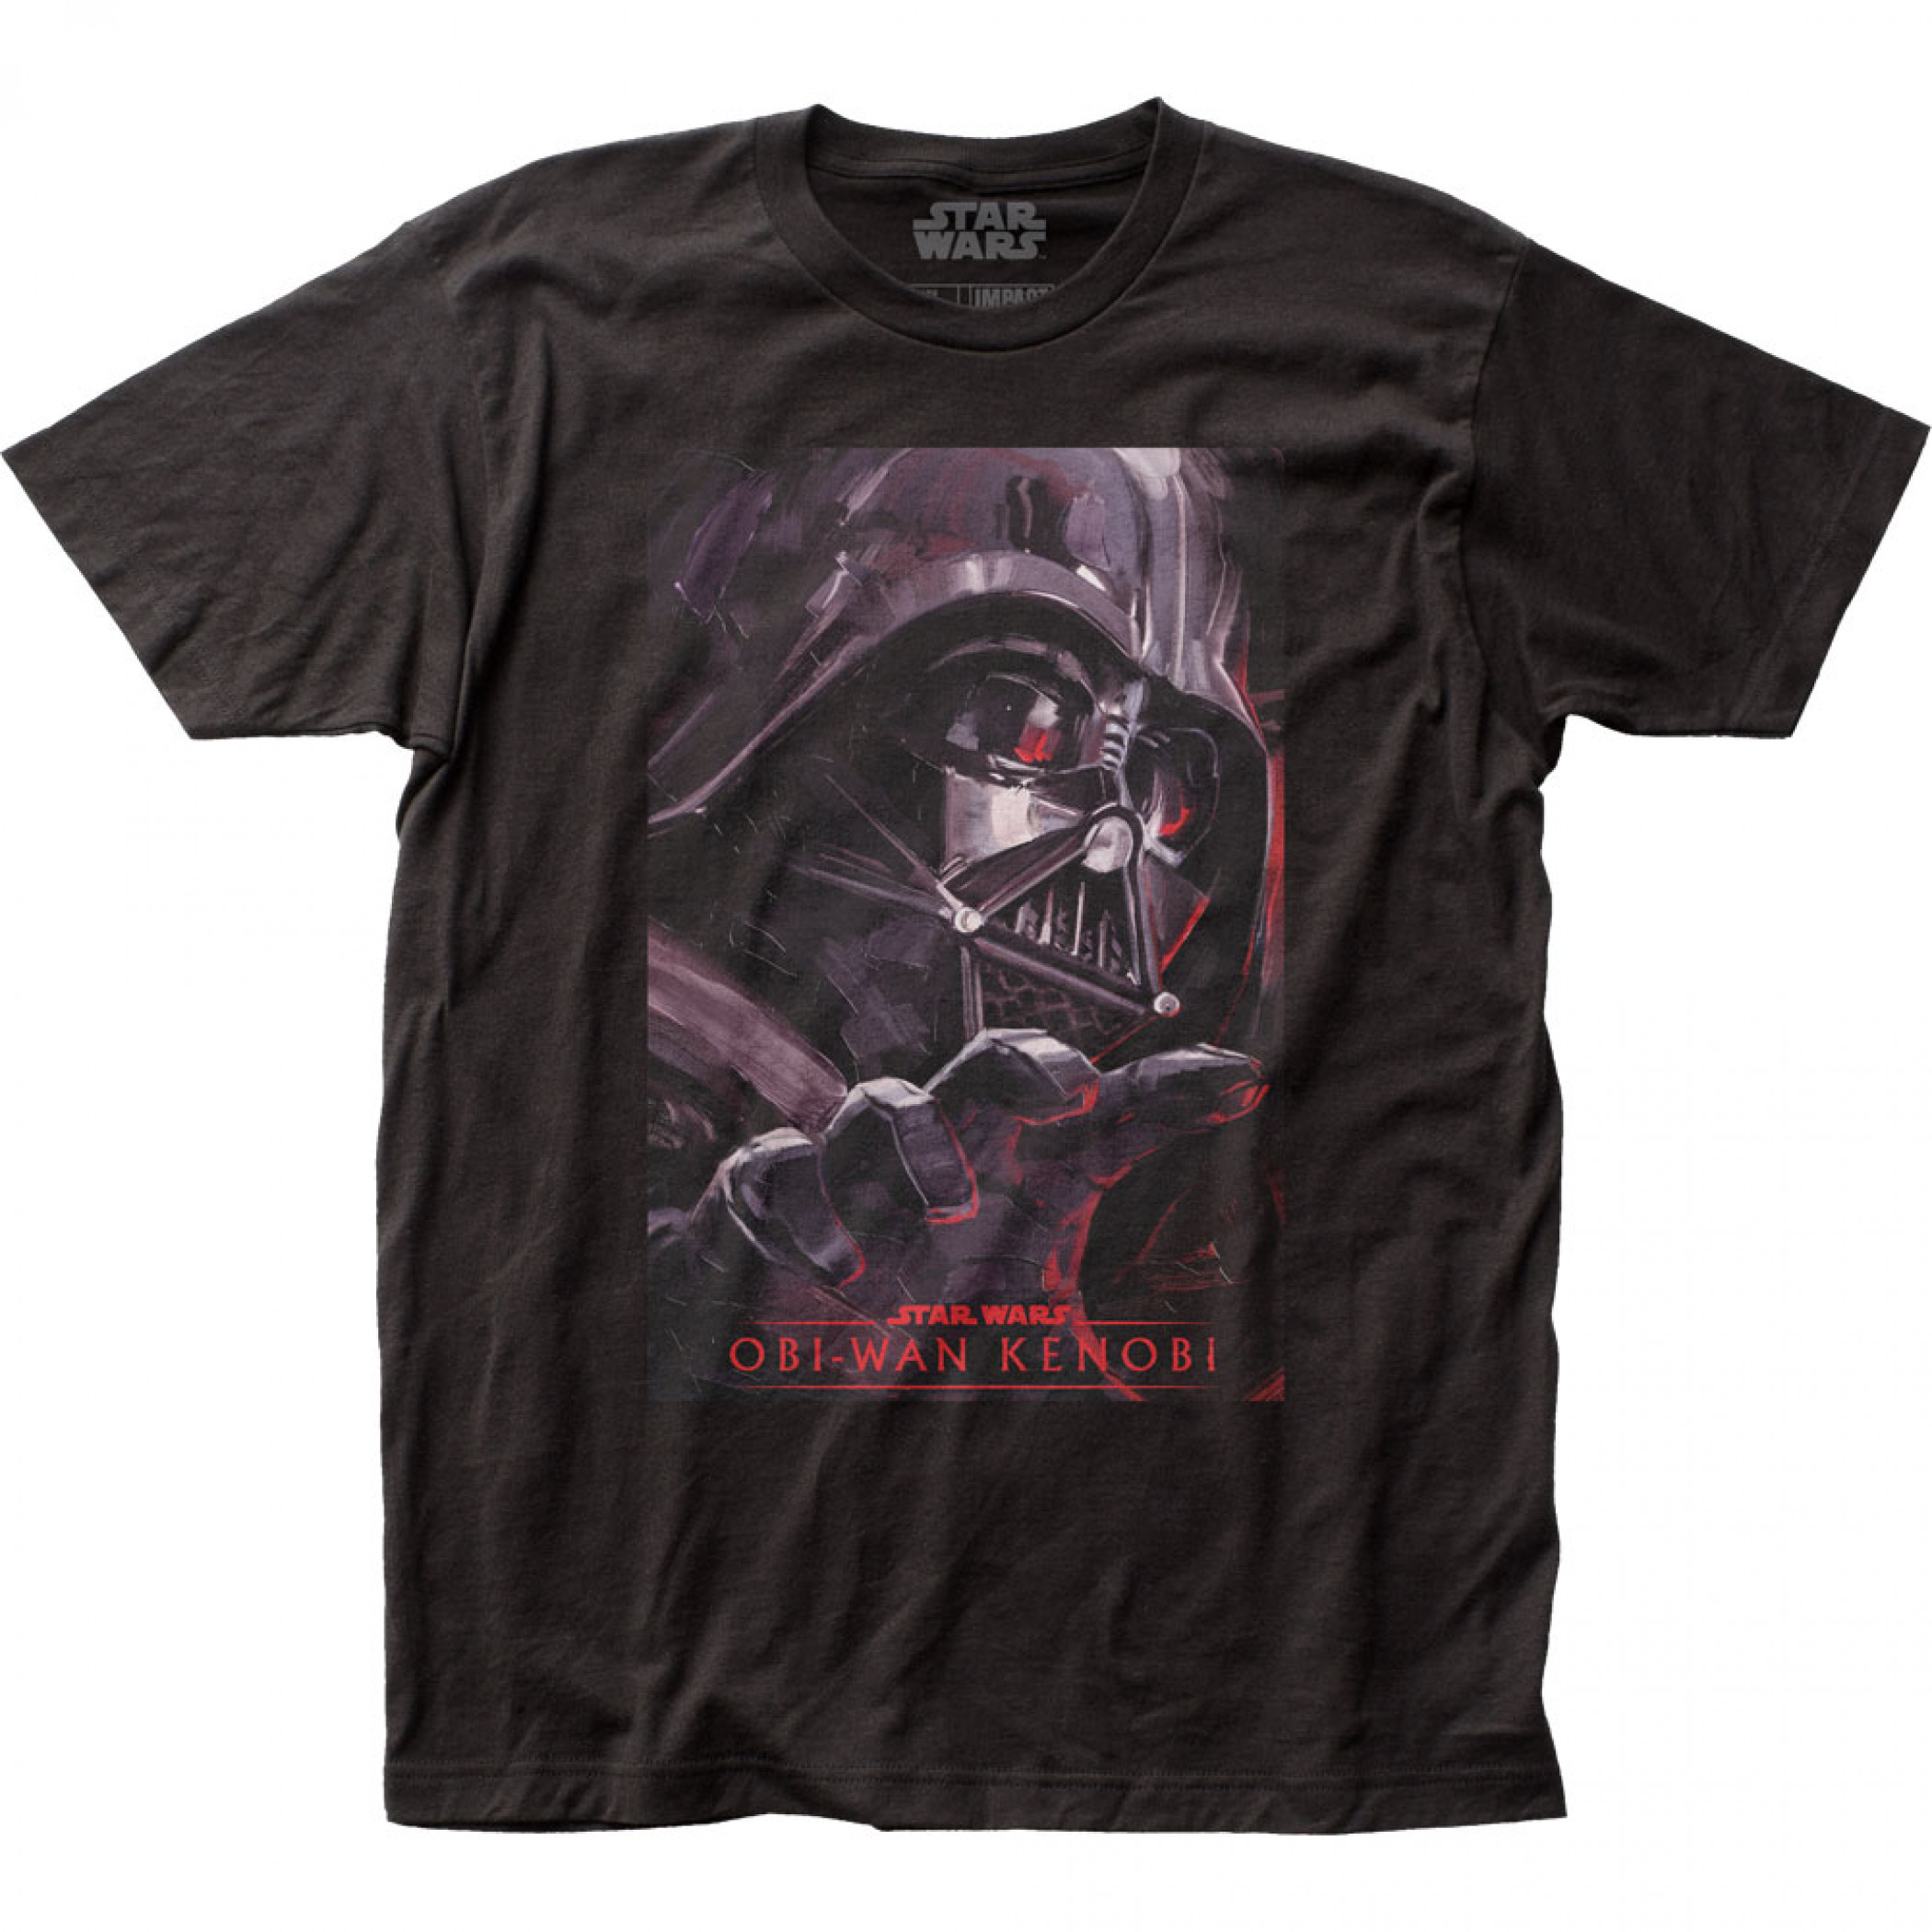 Star Wars Obi-Wan Kenobi Darth Vader Painting T-Shirt